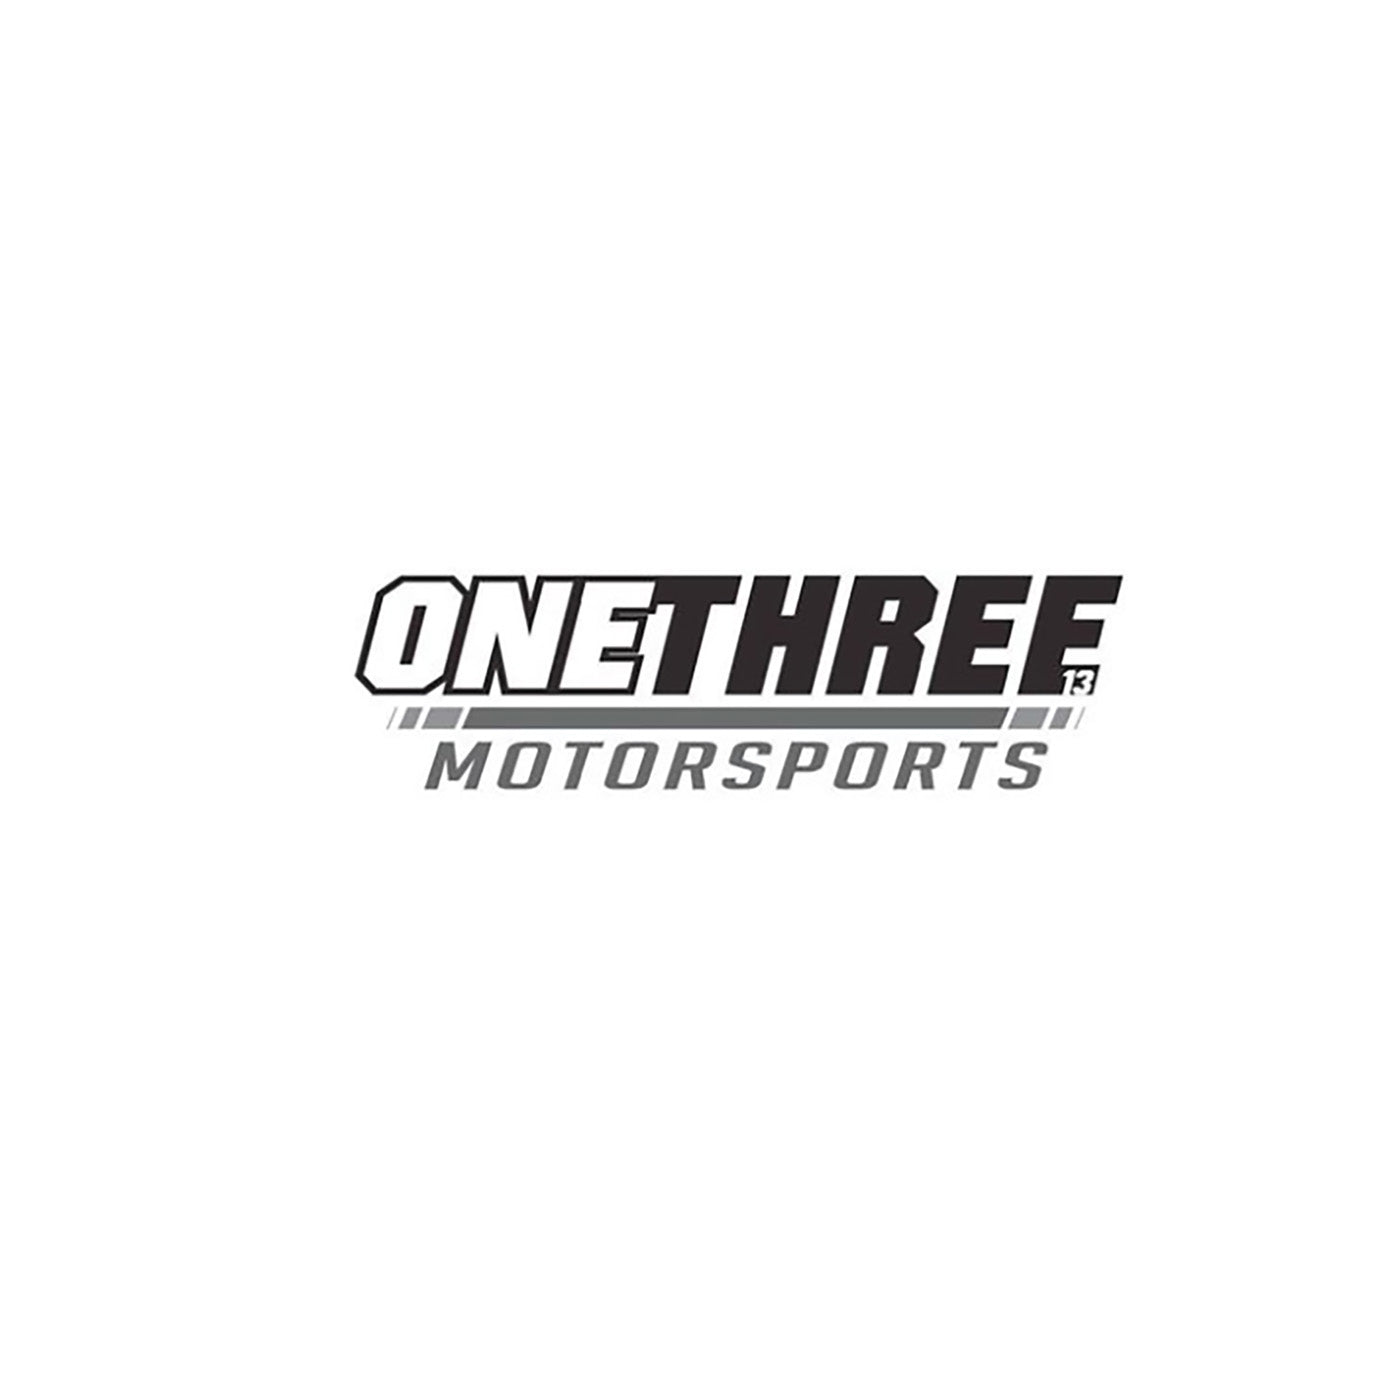 One Three Motorsports Logo